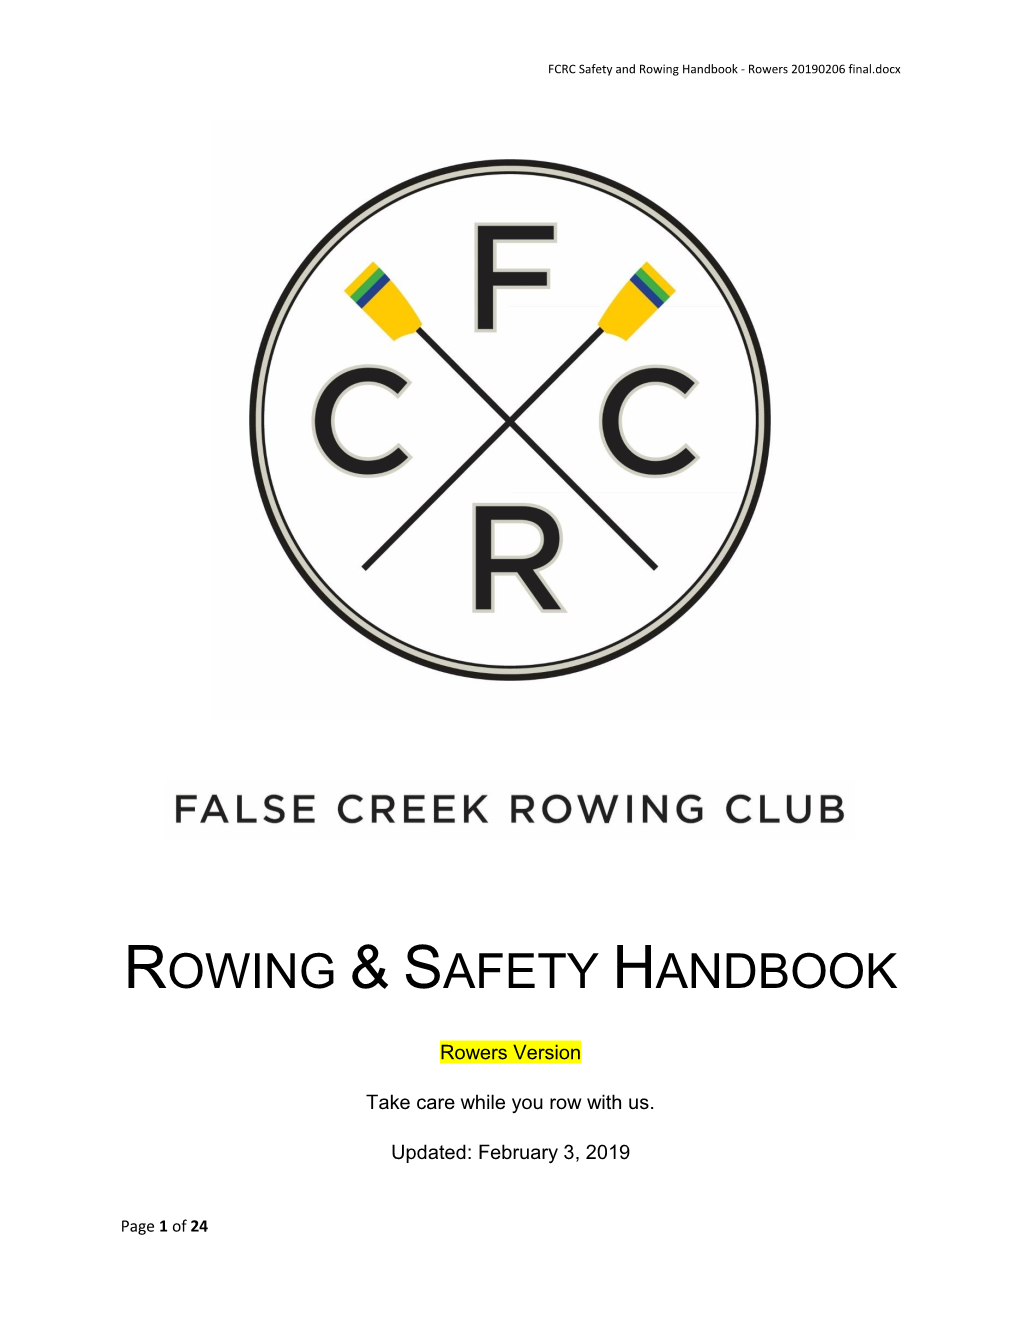 Rowing & Safety Handbook